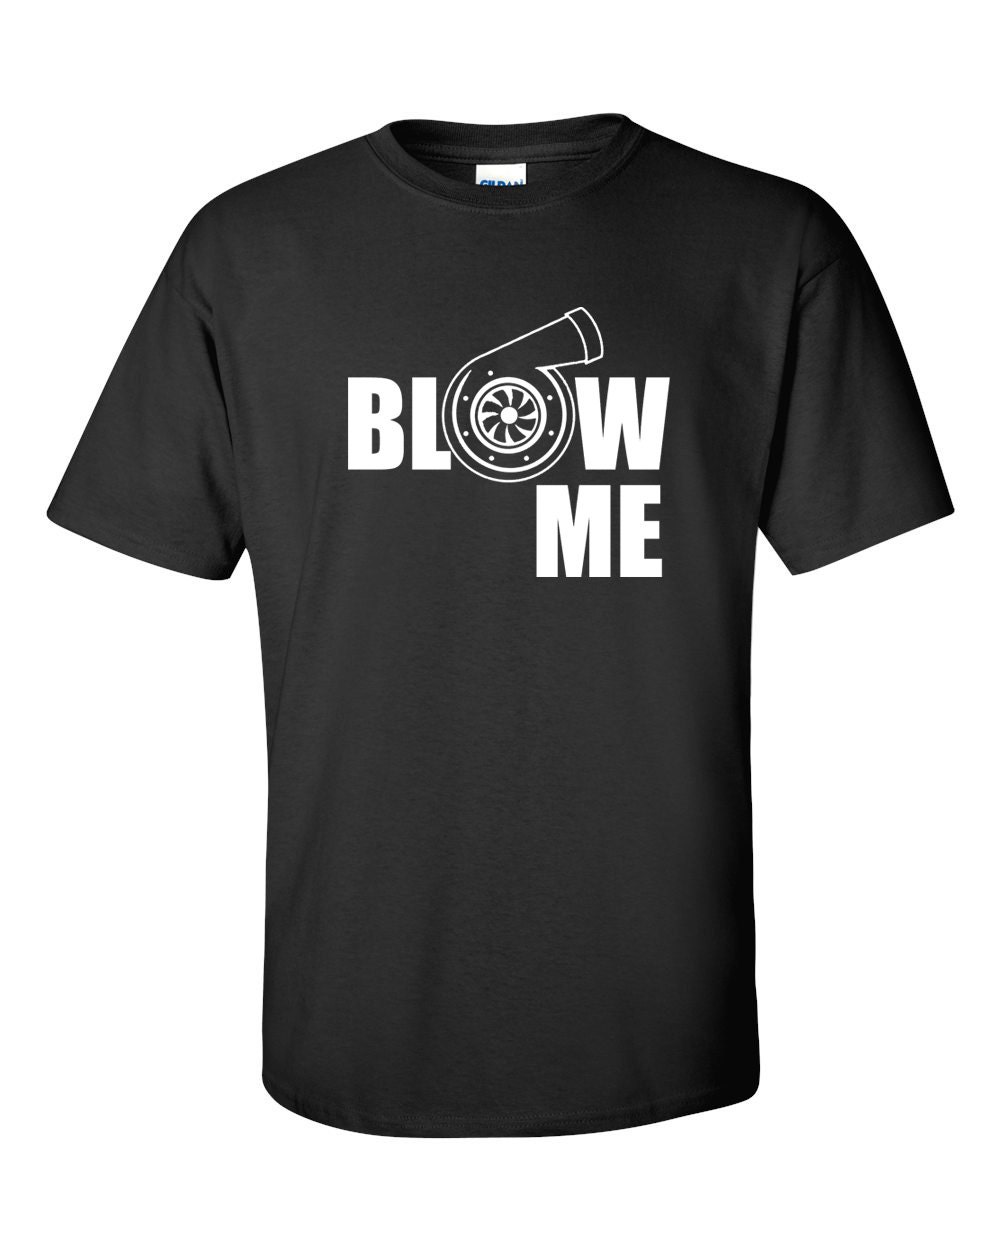 Turbo Blow Me T Shirt // Funny T Shirt // Diesel Truck T Shirt